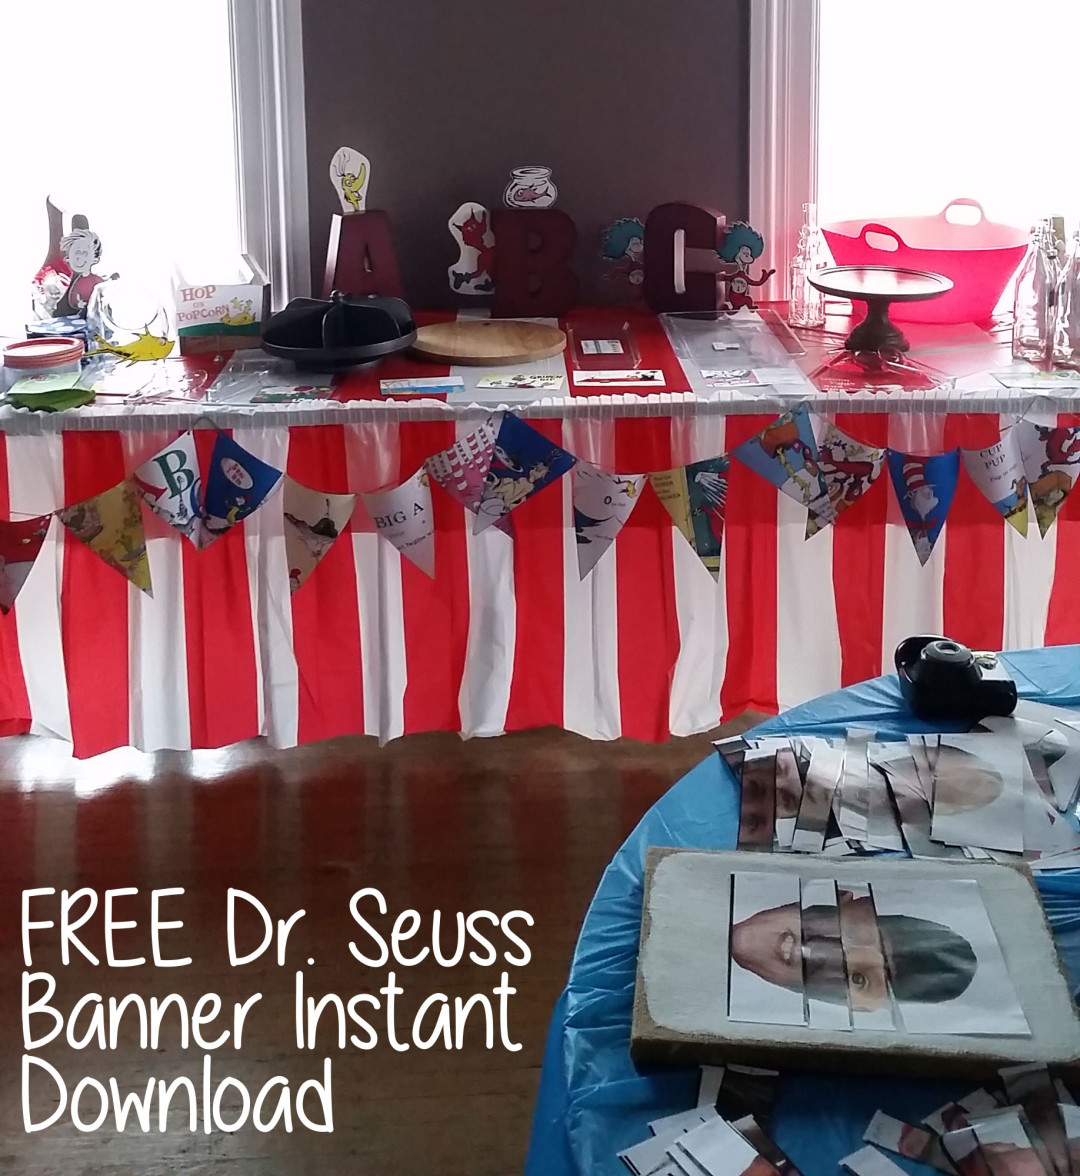 Dr. Seuss Free Banner Instant Download